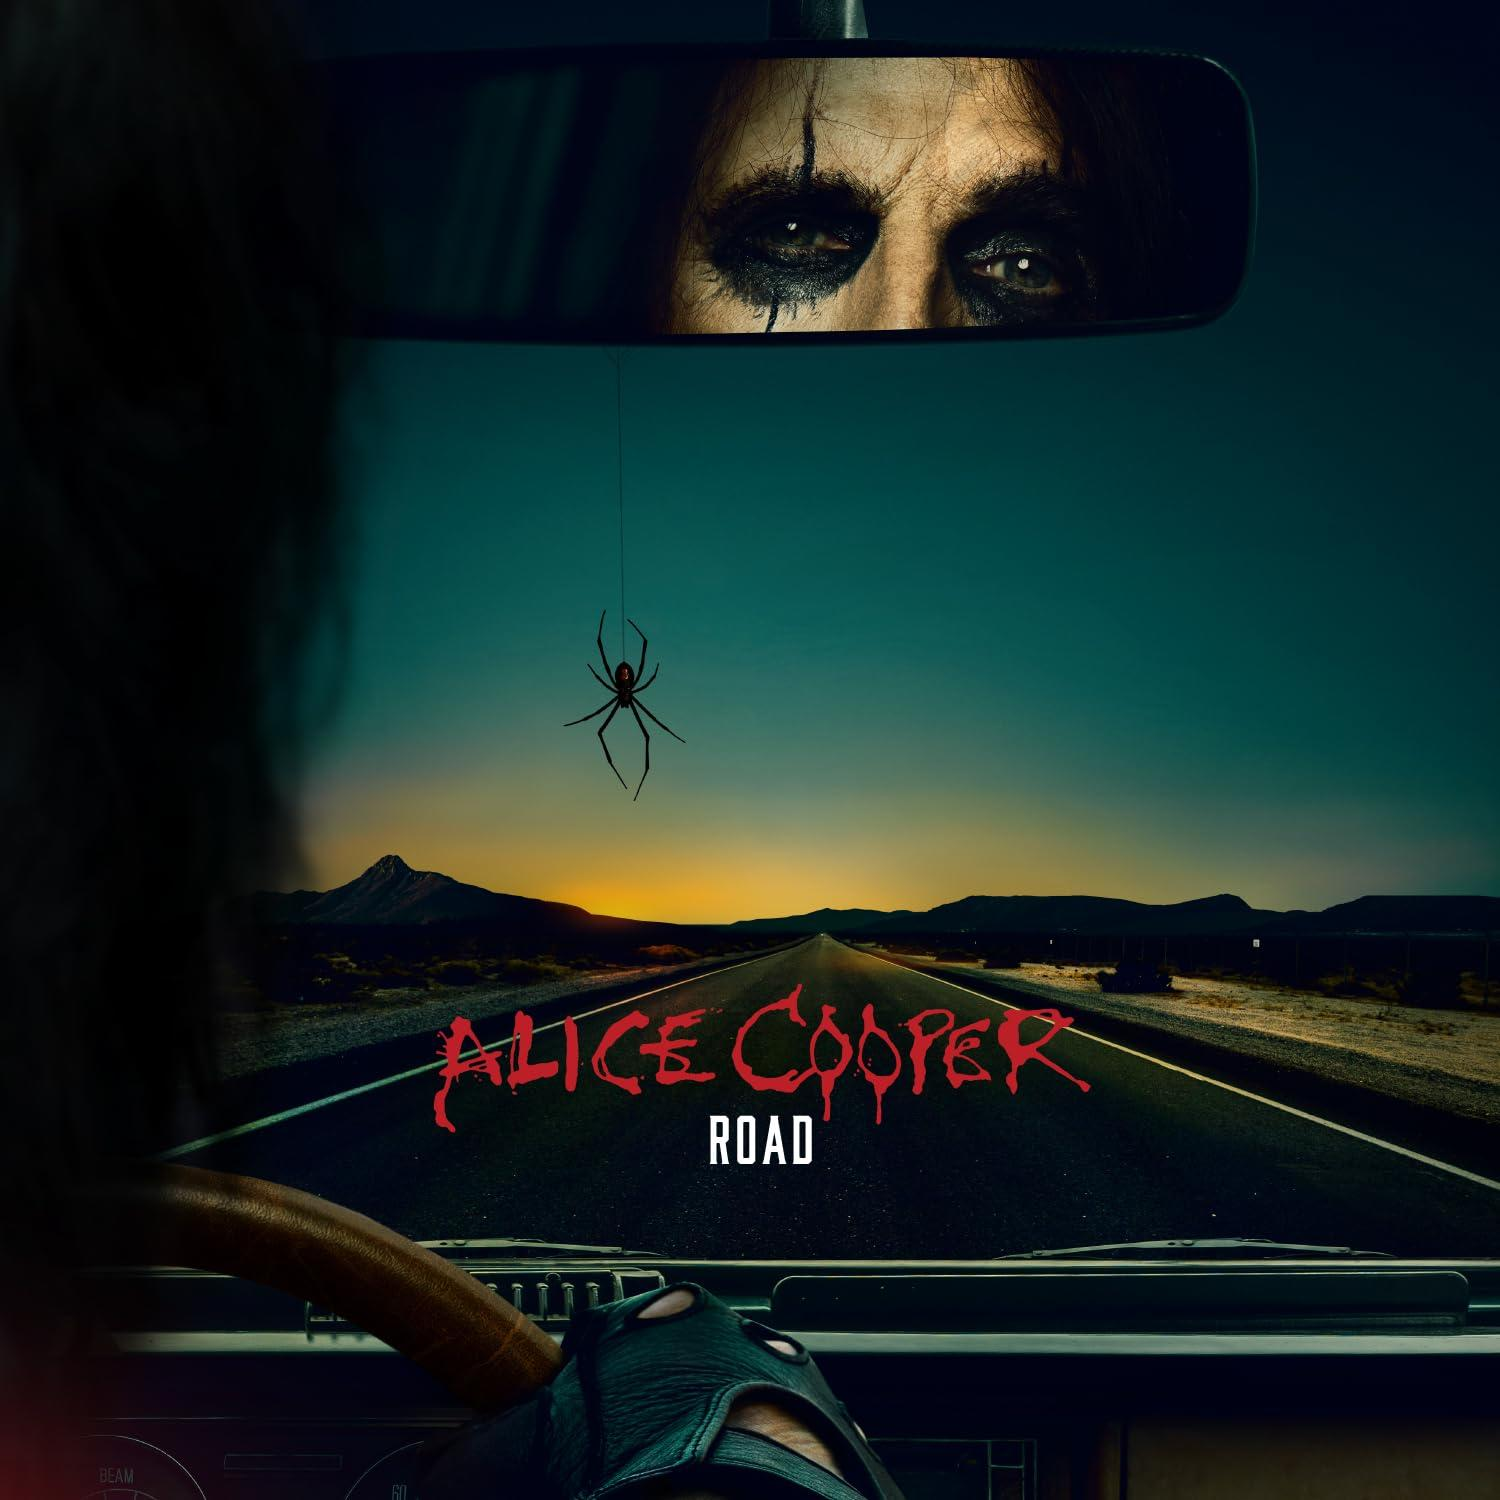 Alice Cooper - ROAD - Video) DVD (CD 